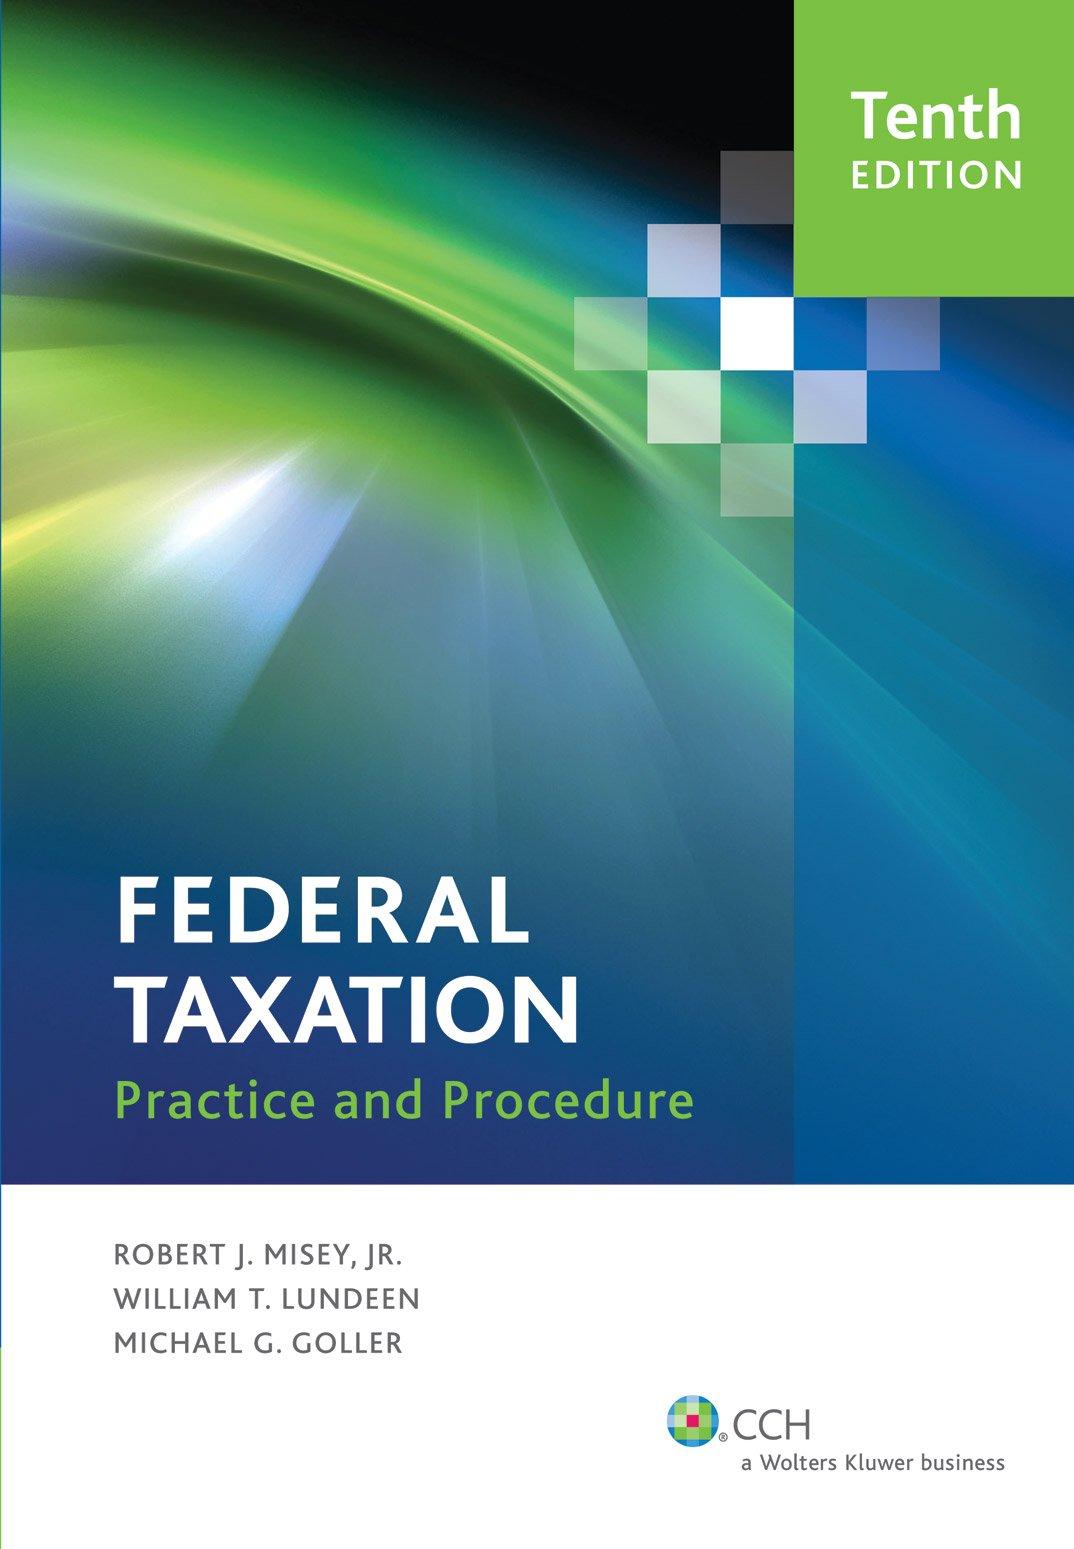 federal taxation practice and procedure 10th edition jd robert e. meldman, robert j. misey 0808026860,